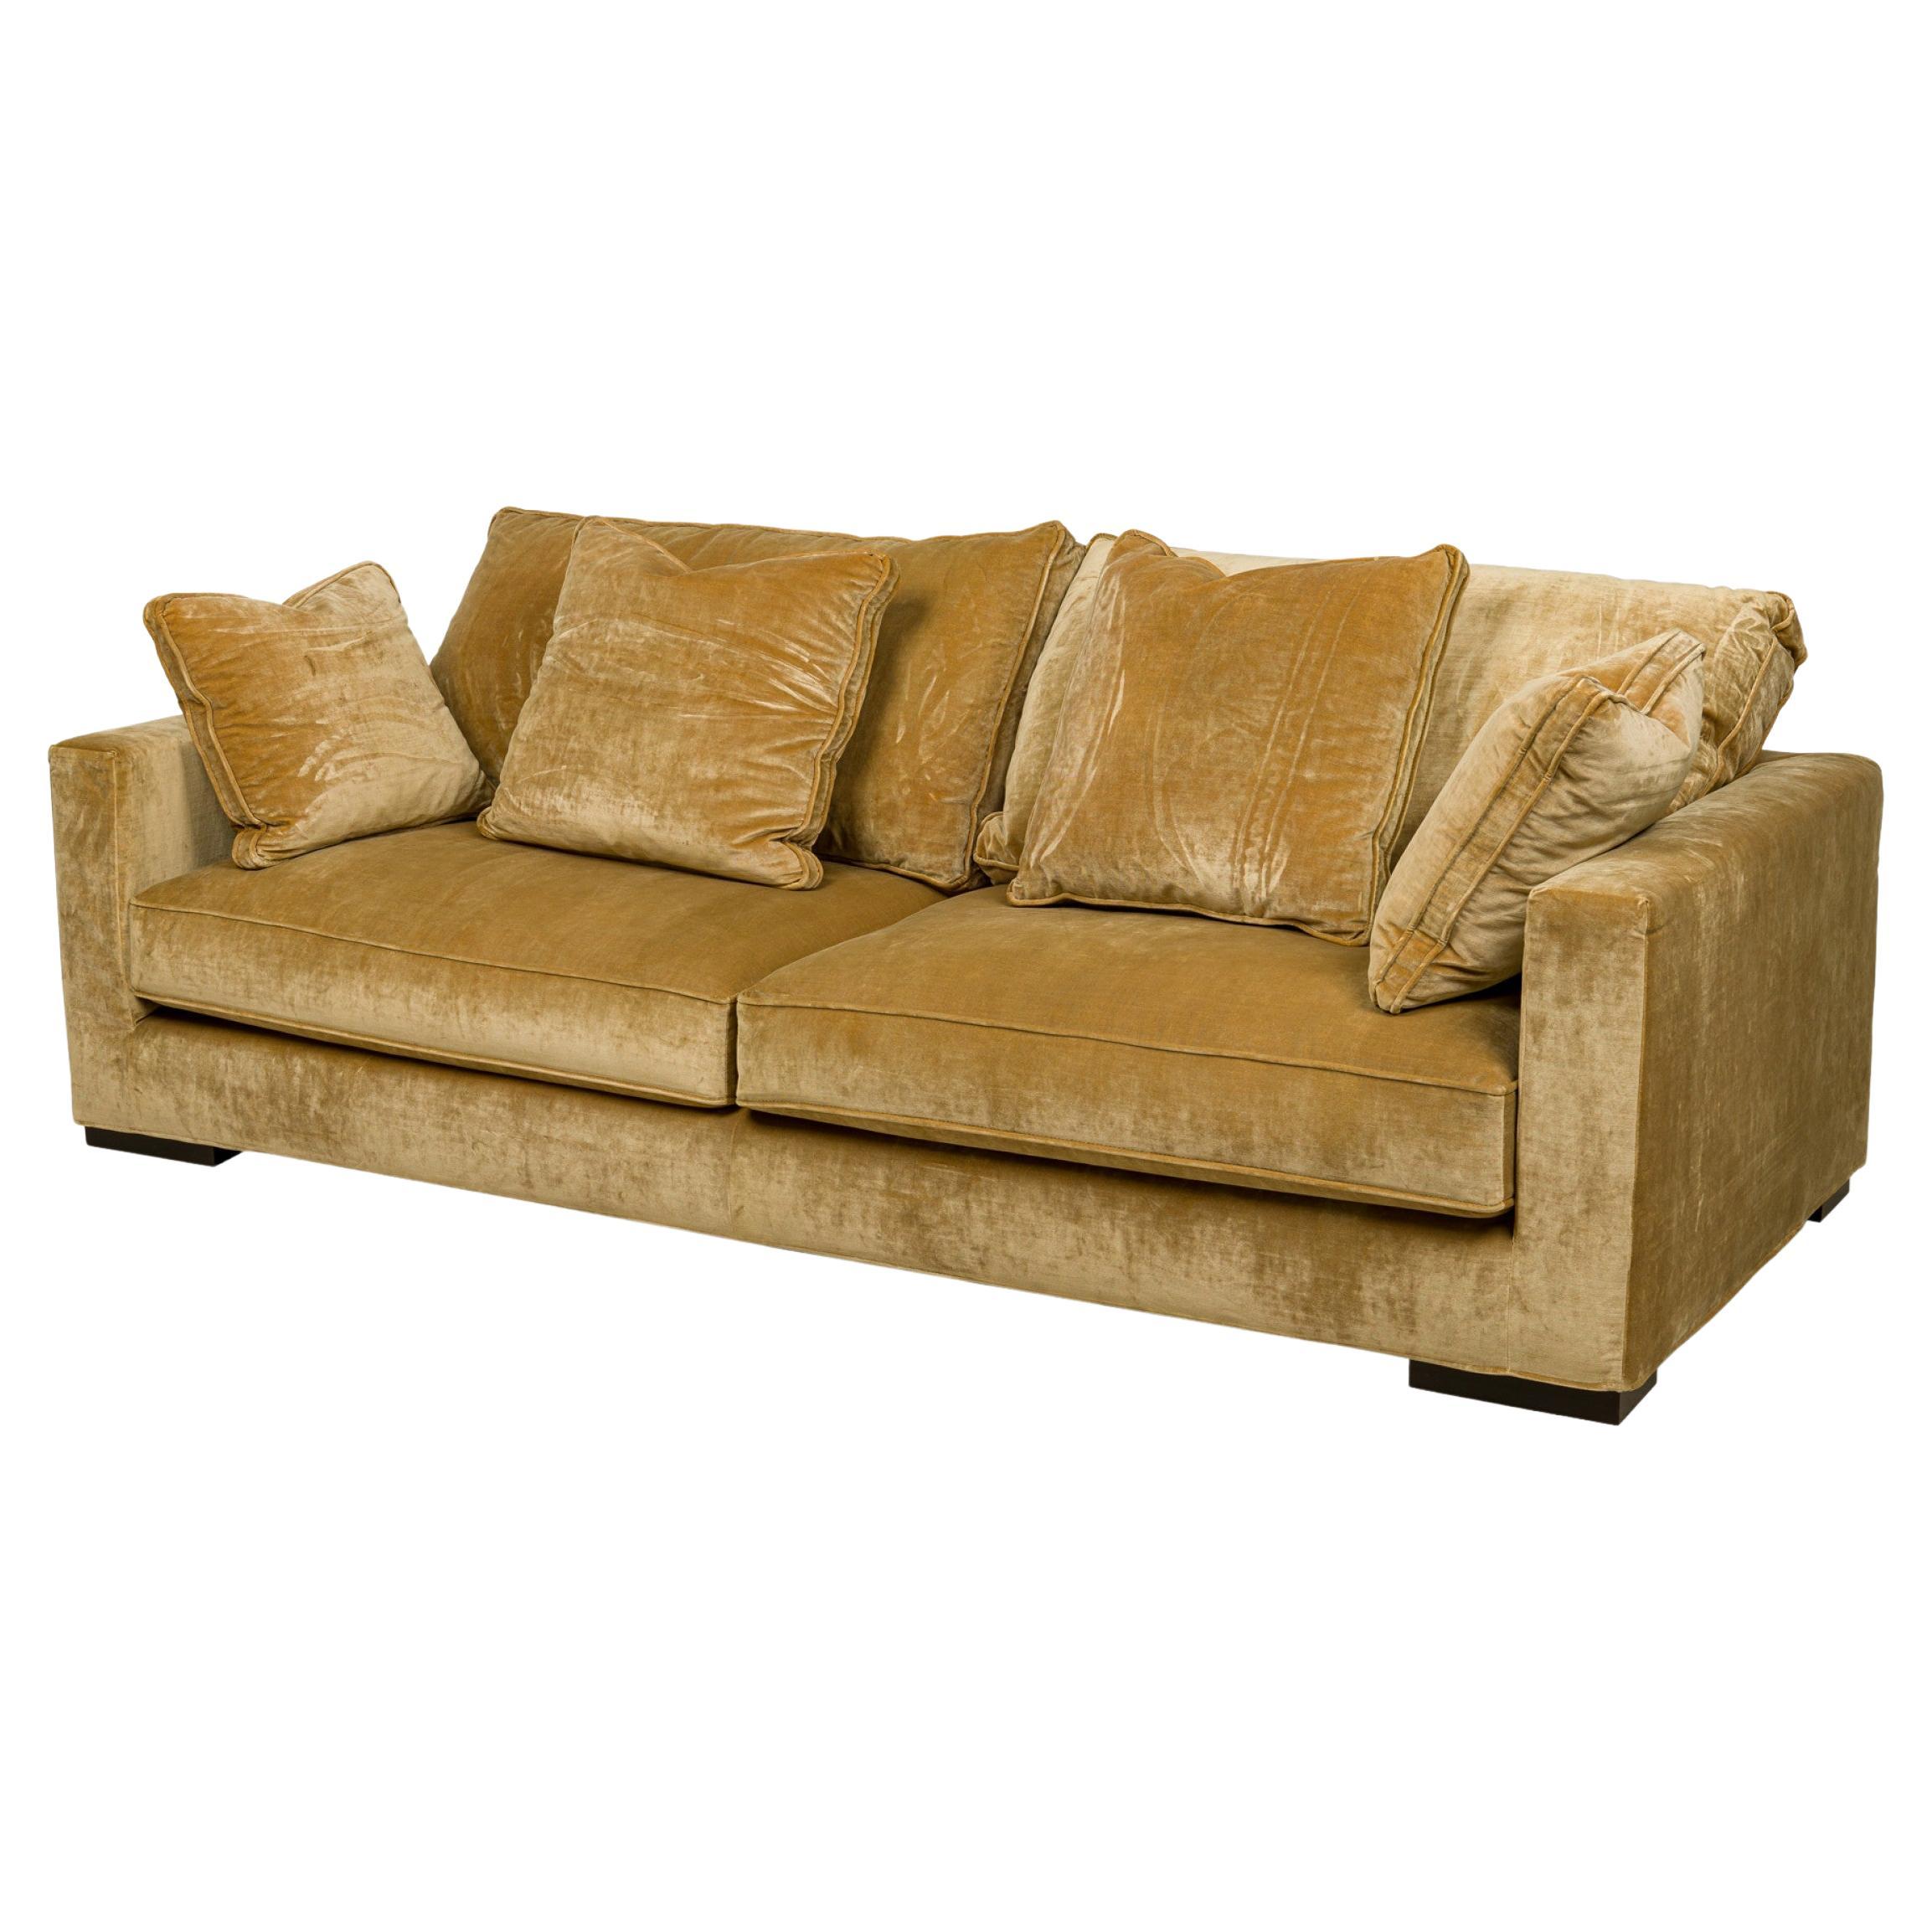 Roche Bobois "Chocolat" Upholstered Leather Sofa at 1stDibs | roche bobois  leather sofa, roche bobois leather chair, roche bobois leather couch